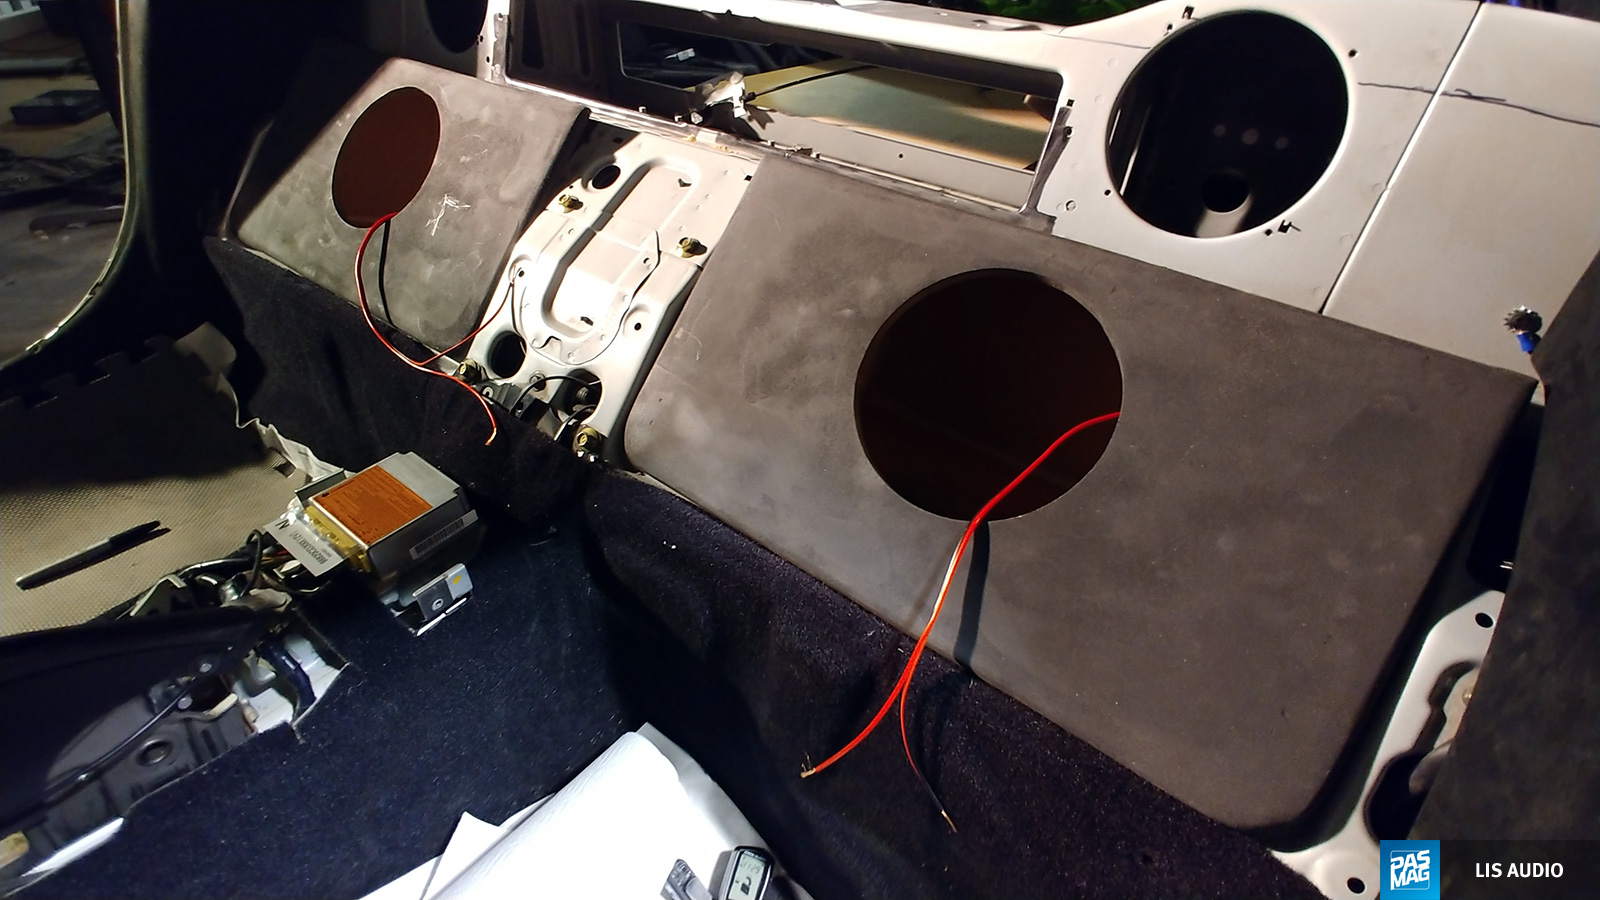 02 lis audio show ready car audio system subwoofer boxes pasmag